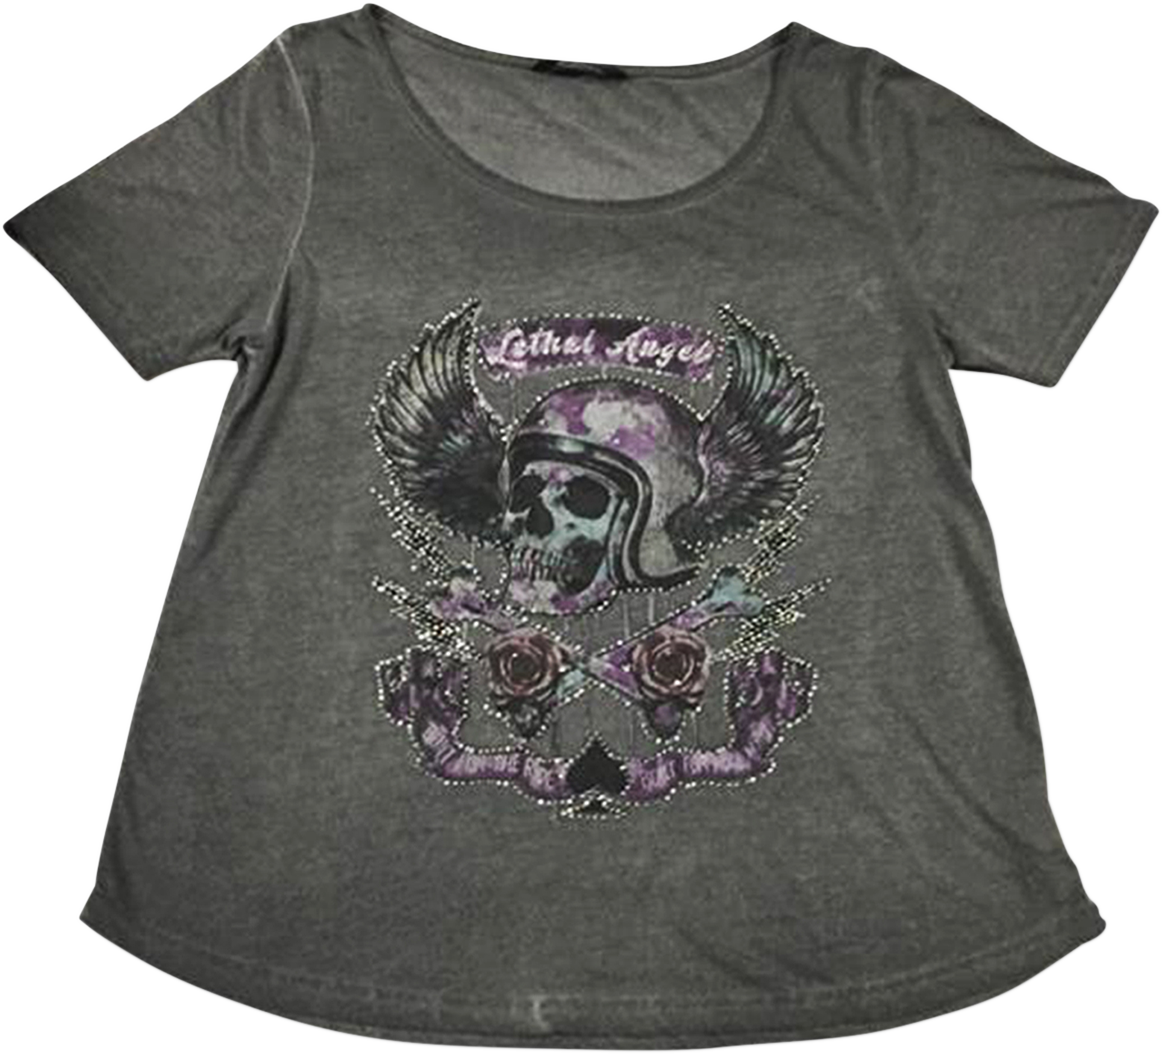 LETHAL THREAT Women's Sinwheels T-Shirt - Gray - 1X LA20613-1X